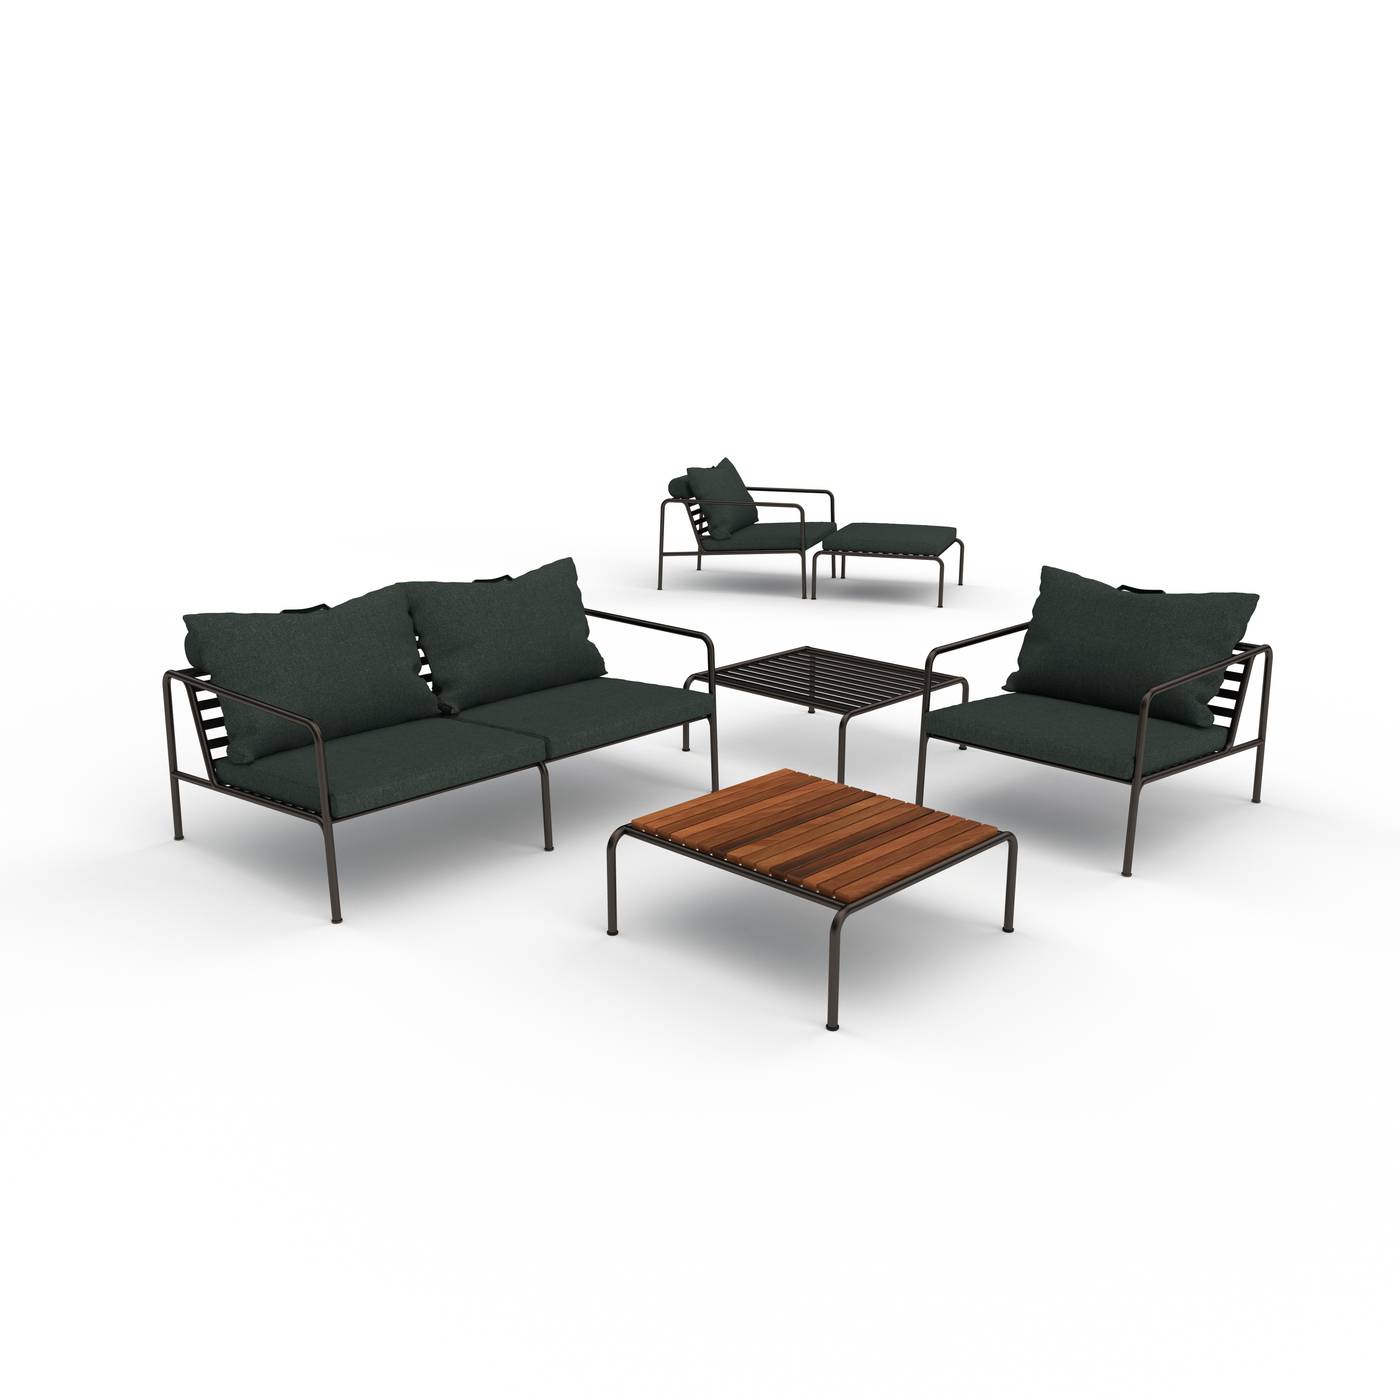 Avon Lounge Chair - Apline Green